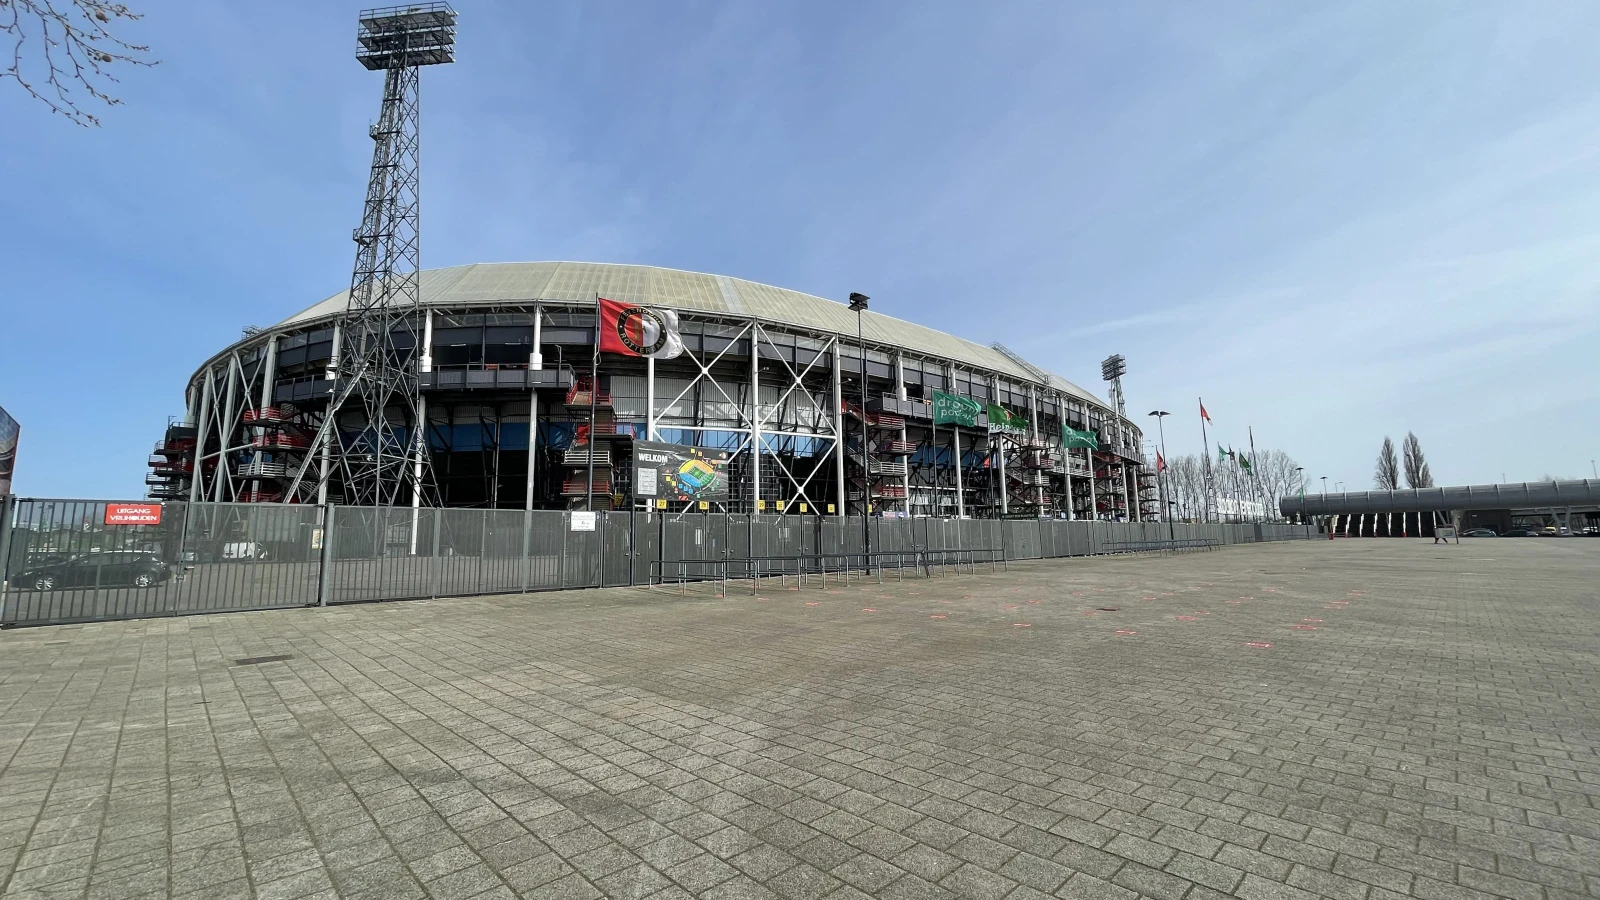 Datum en tijdstip voor bekerwedstrijd tussen Feyenoord en Ajax bekend